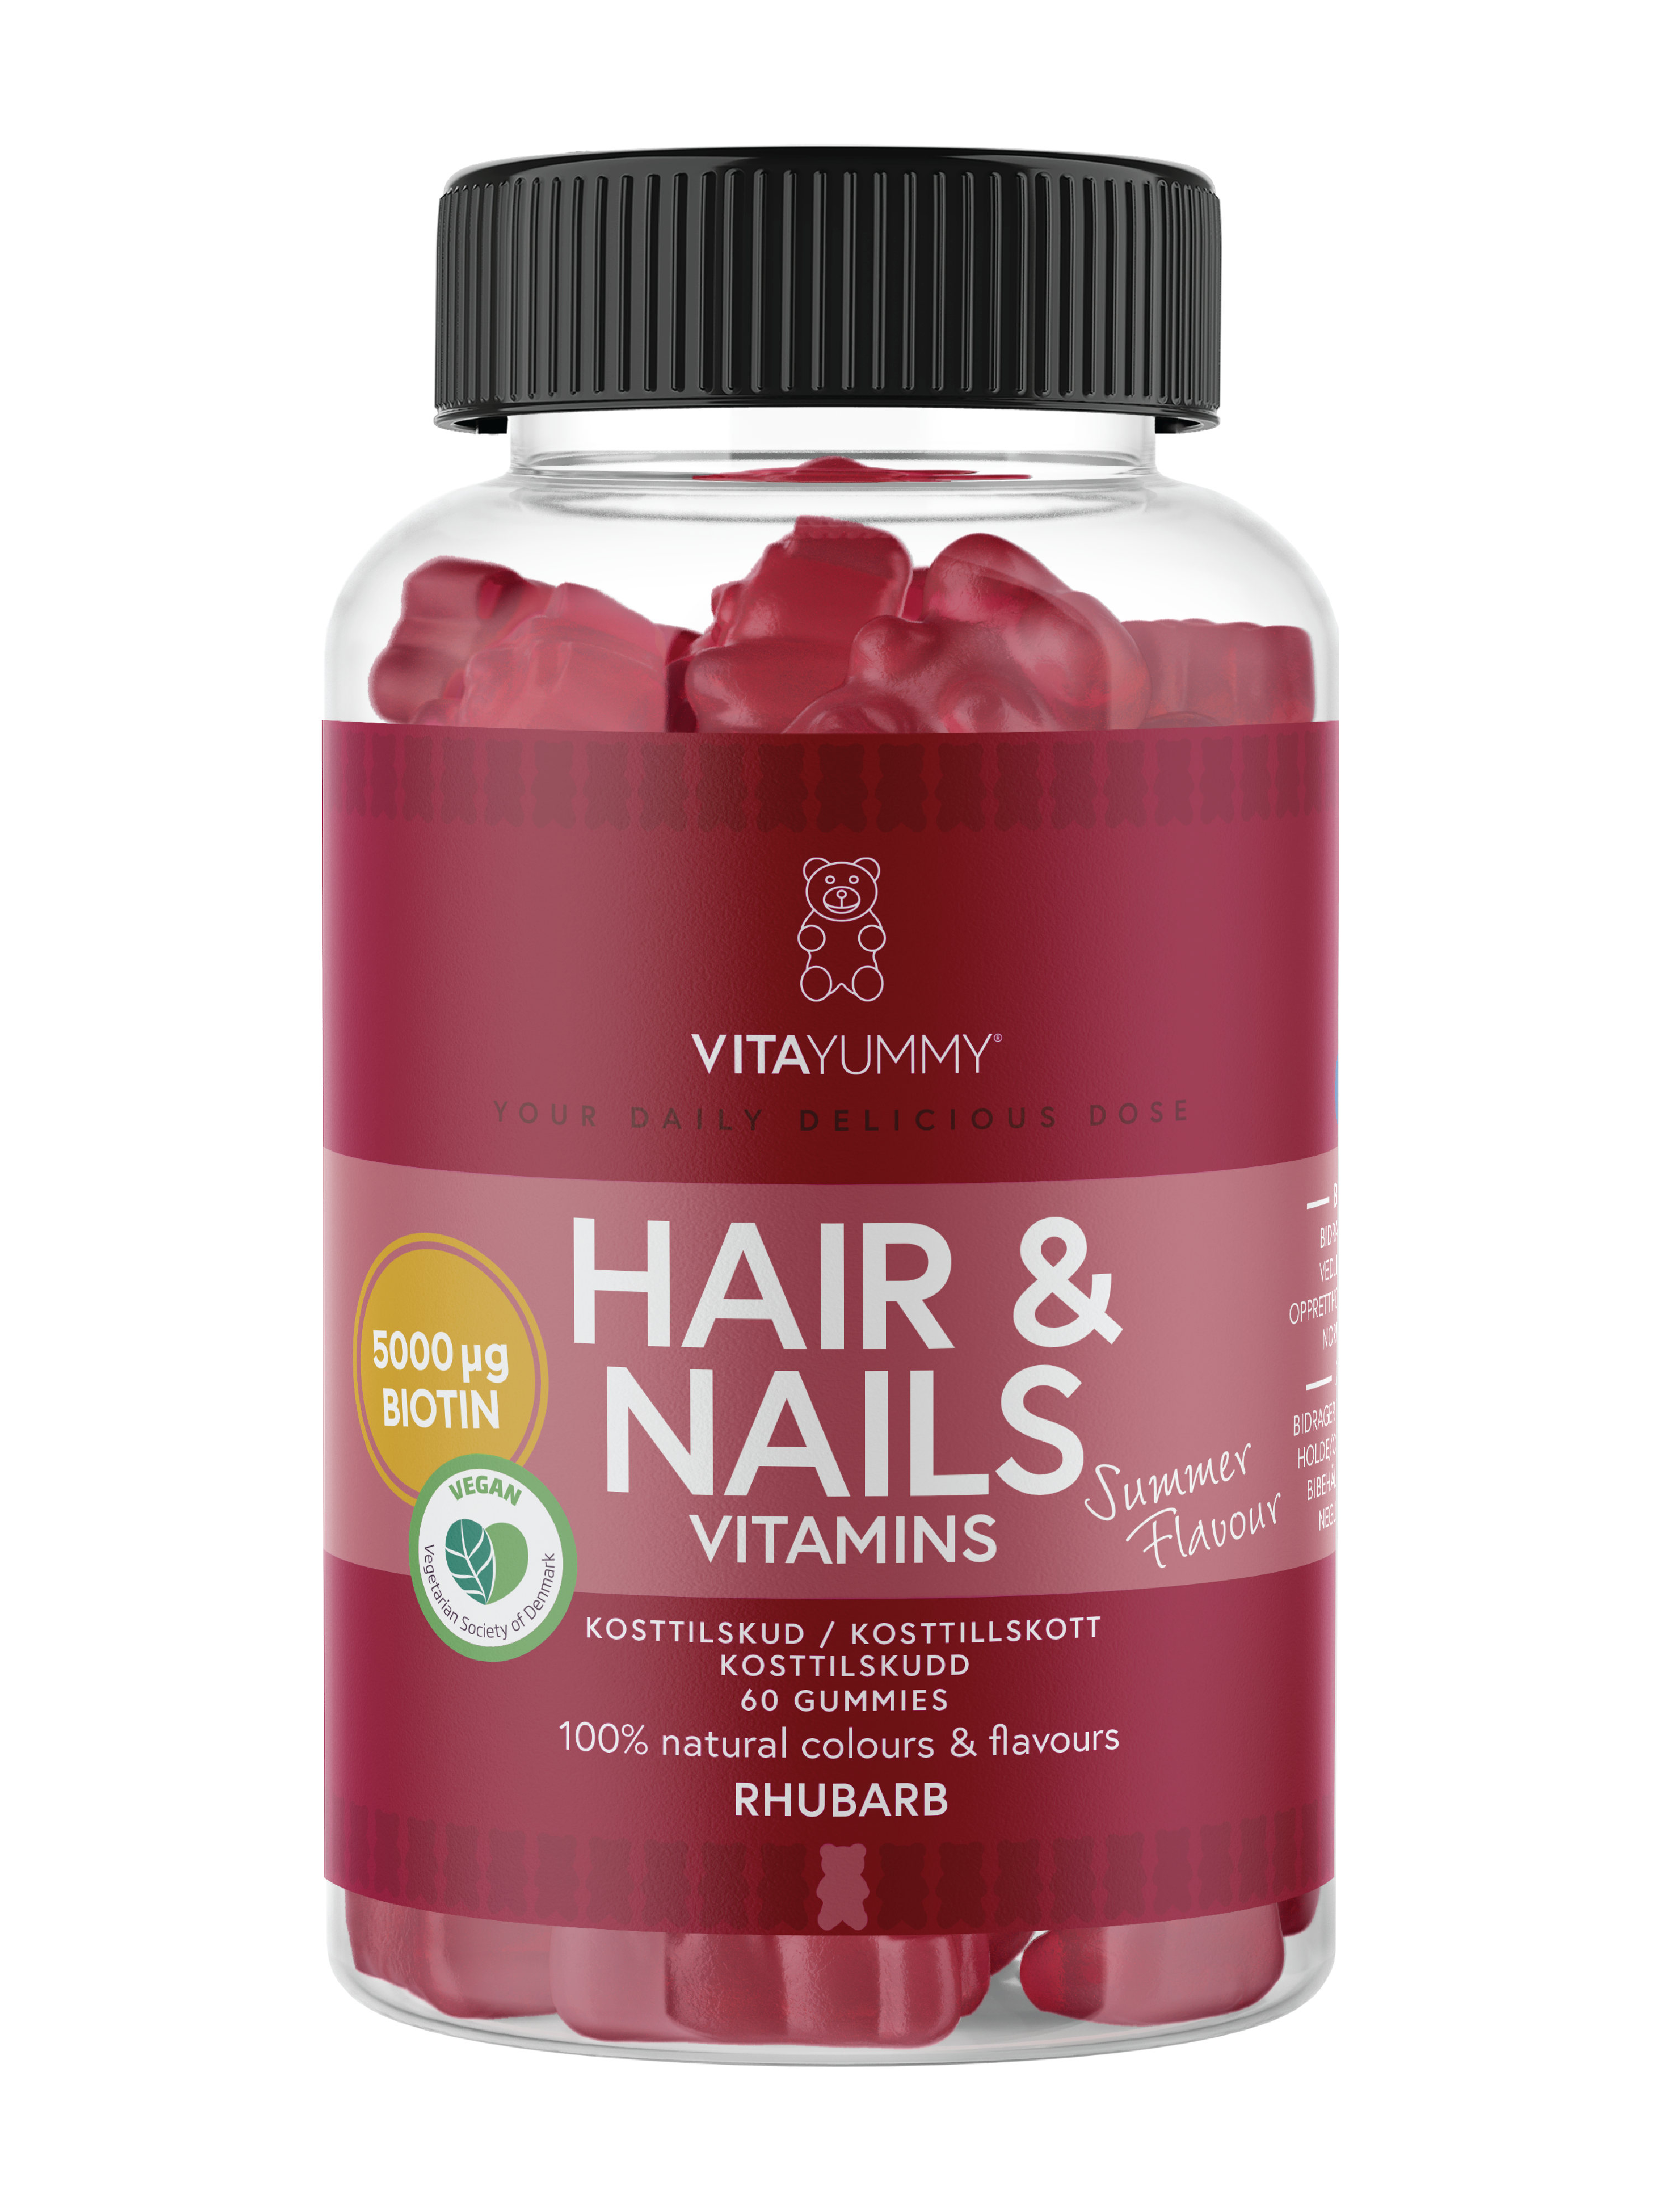 VitaYummy Hair & Nails Vitamins Summer Edition, Rabarbra, 60 stk.